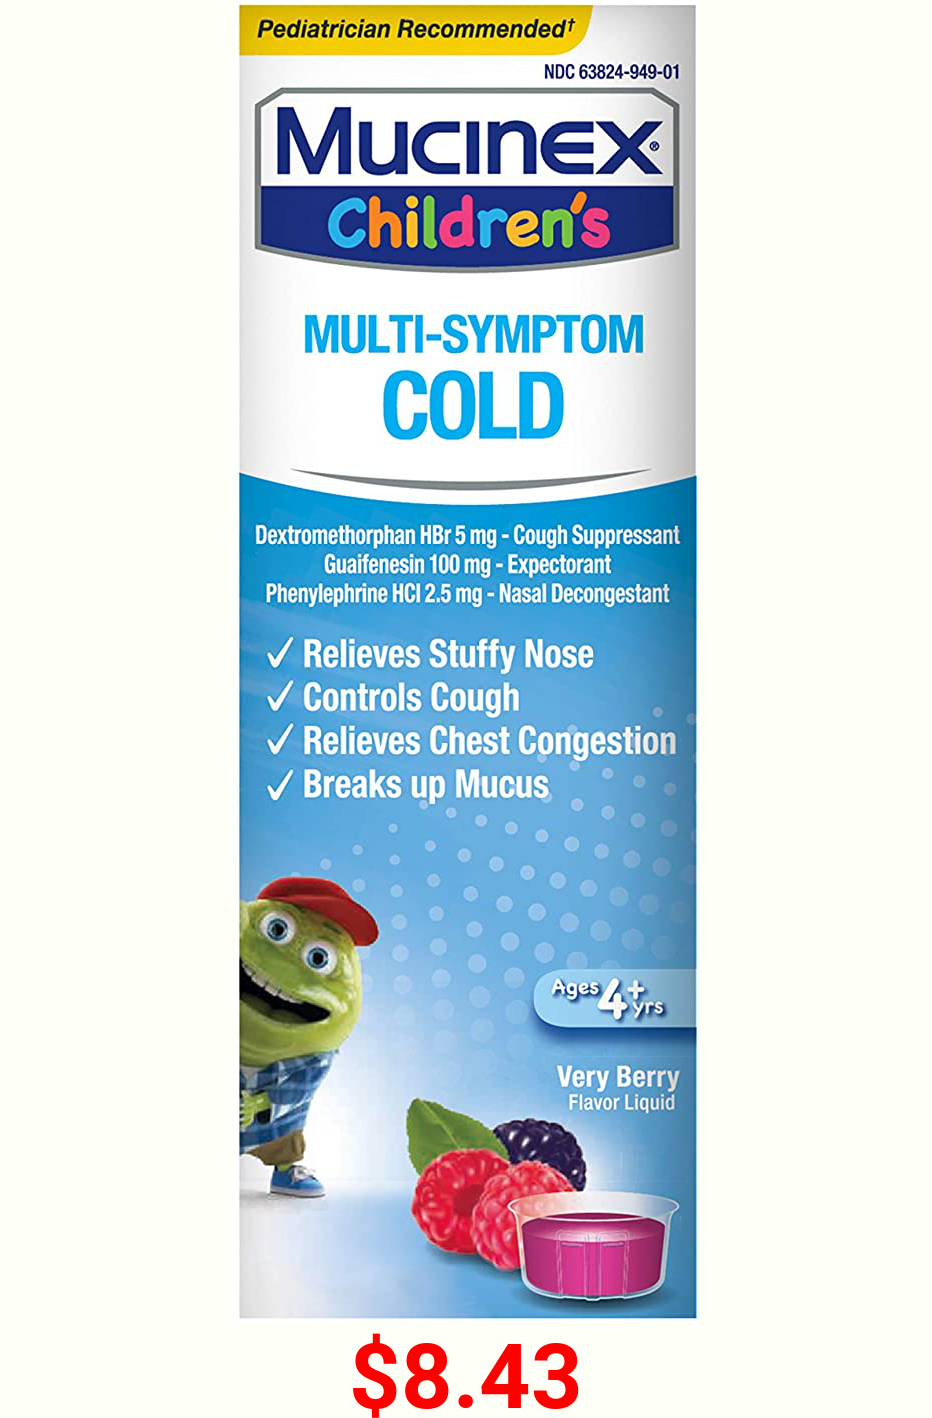 Mucinex Children's Multi-Symptom Cold Relief Liquid- Relieves Stuffy Nose, Chest Congestion, Cough & Mucus, Expectorant & Cough Suppressant With Dextromethorphan, Guaifenesin, Phenylephrine, 4 oz.